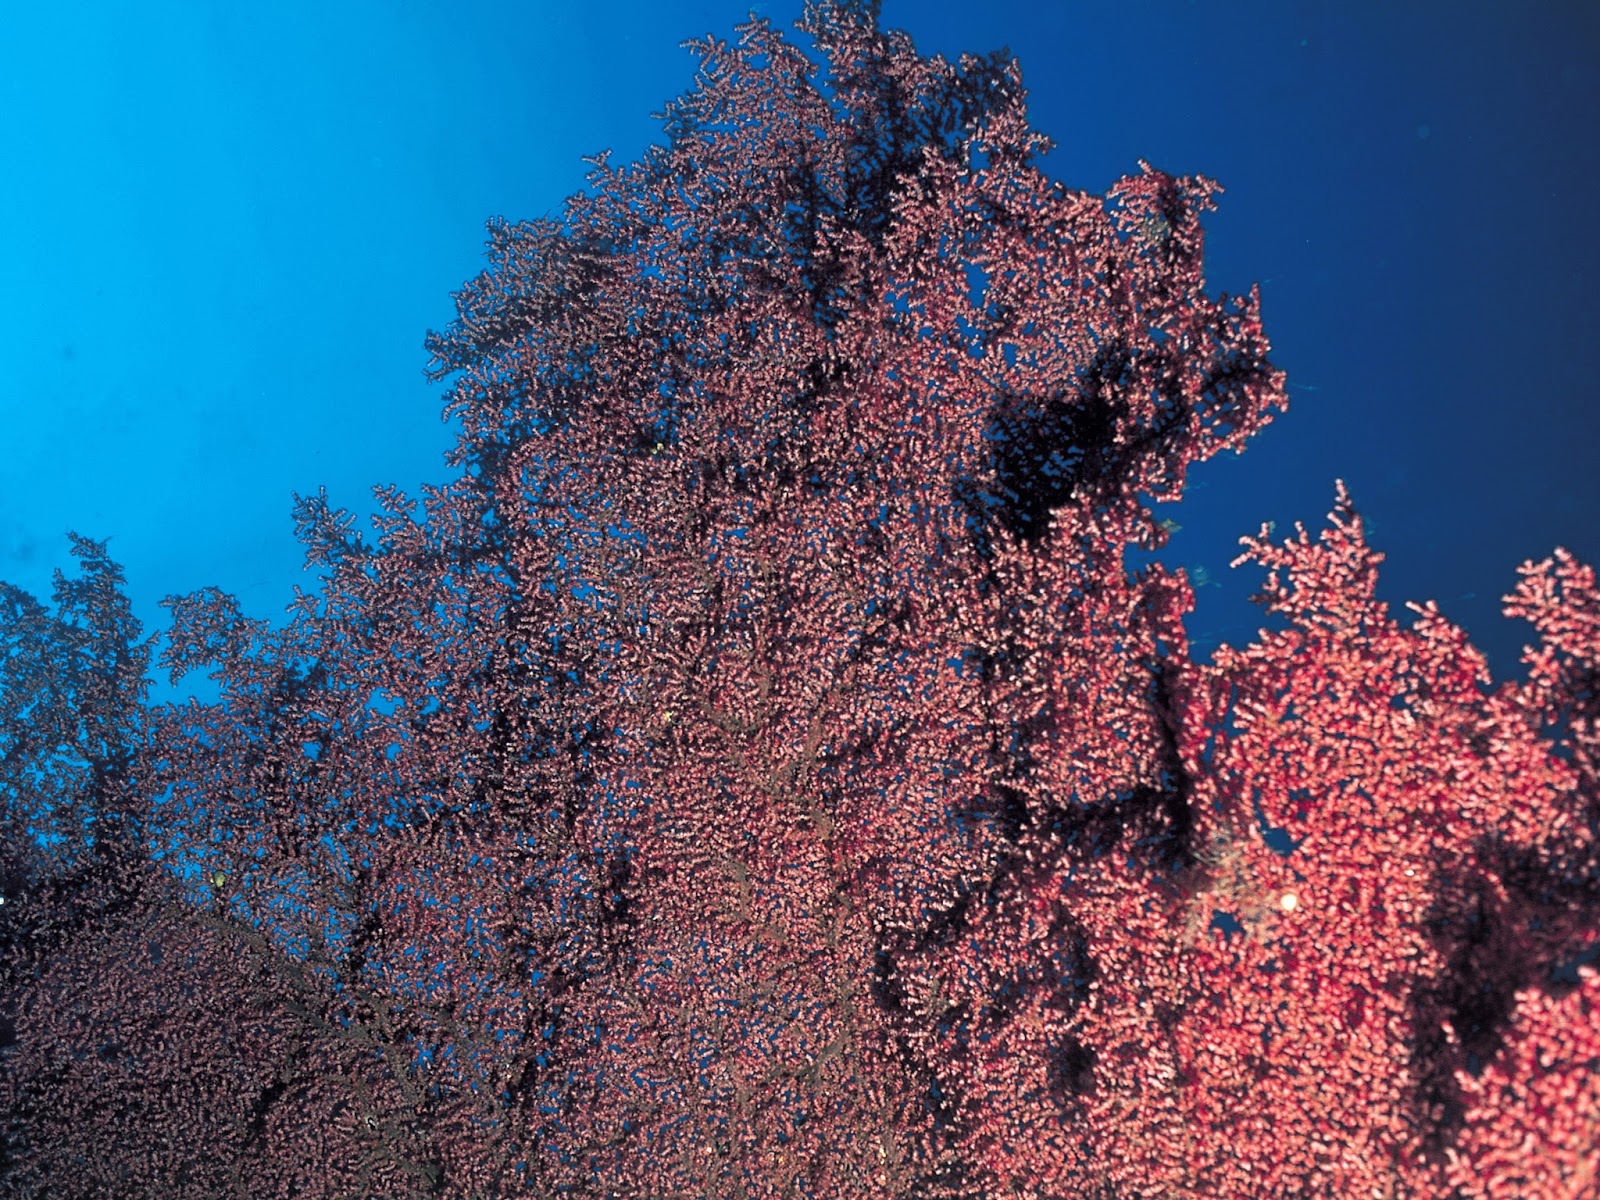 Coral color. Капнелла коралл. Цвета кораллов в природе. Коралловый цвет в природе. Коралловые цветы в природе.